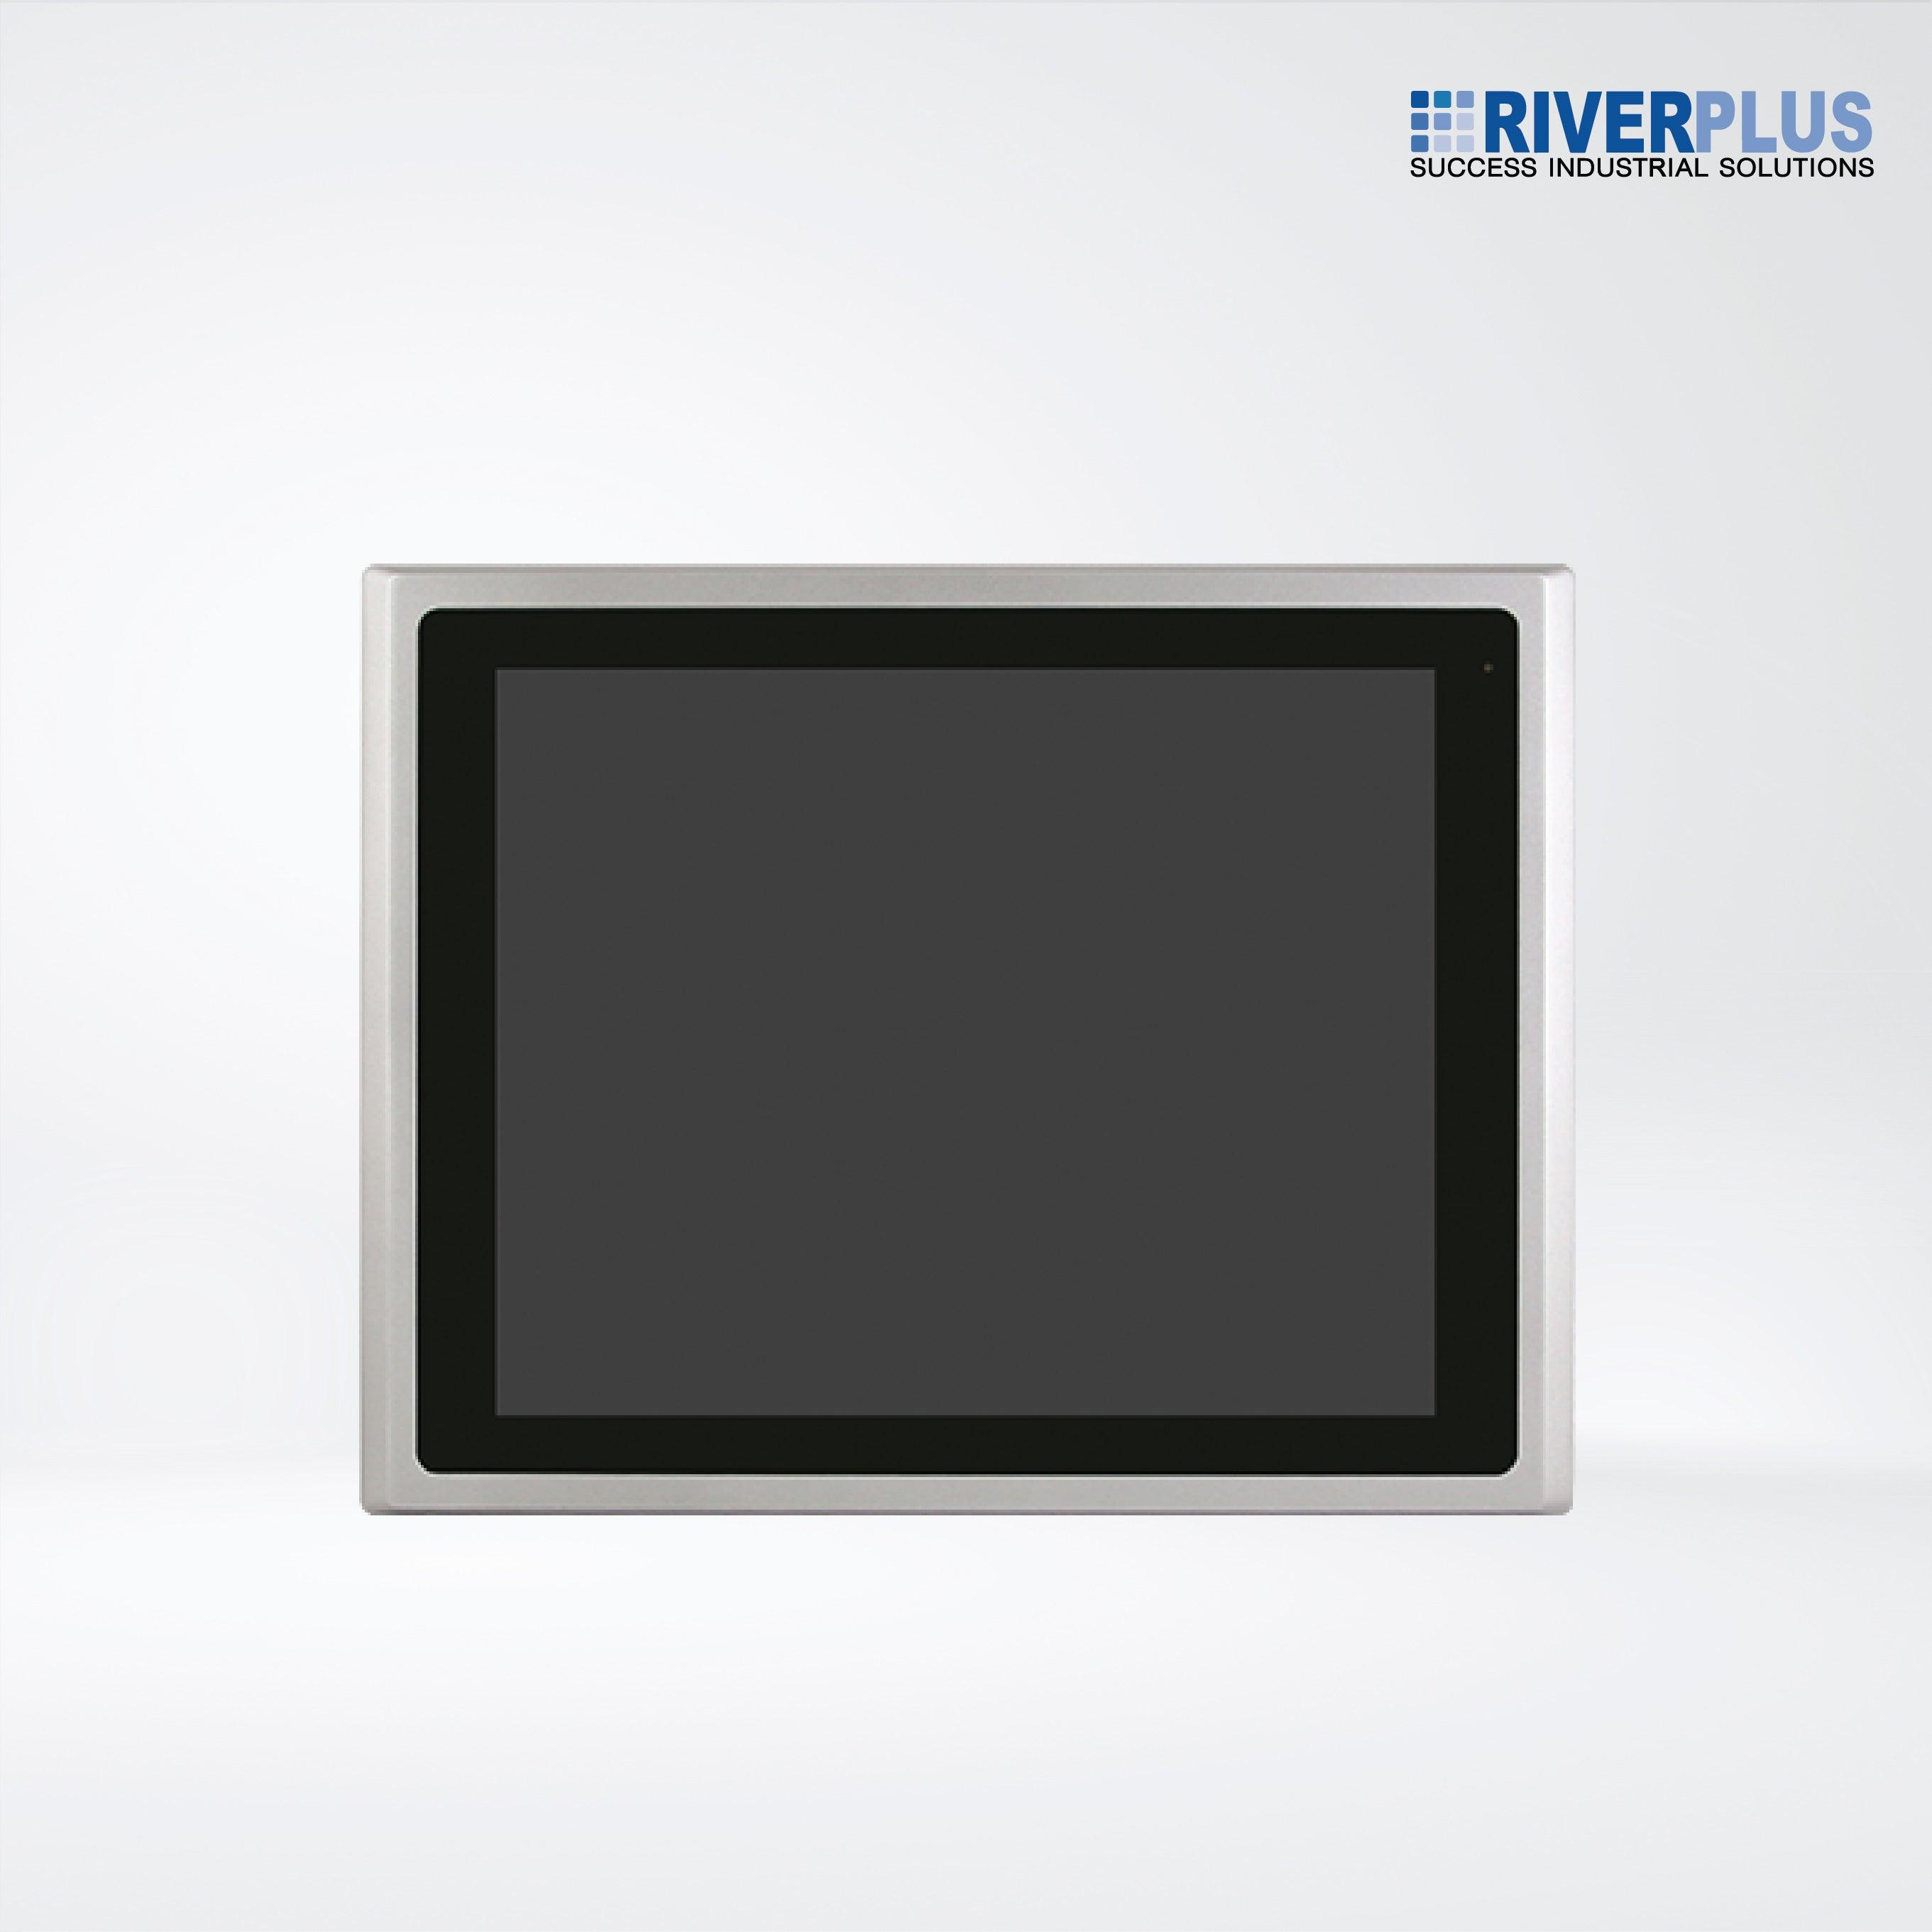 ARCHMI-917APH 6th Gen. Intel Core i3/i5, Fanless Industrial Compact Size Panel PC - Riverplus